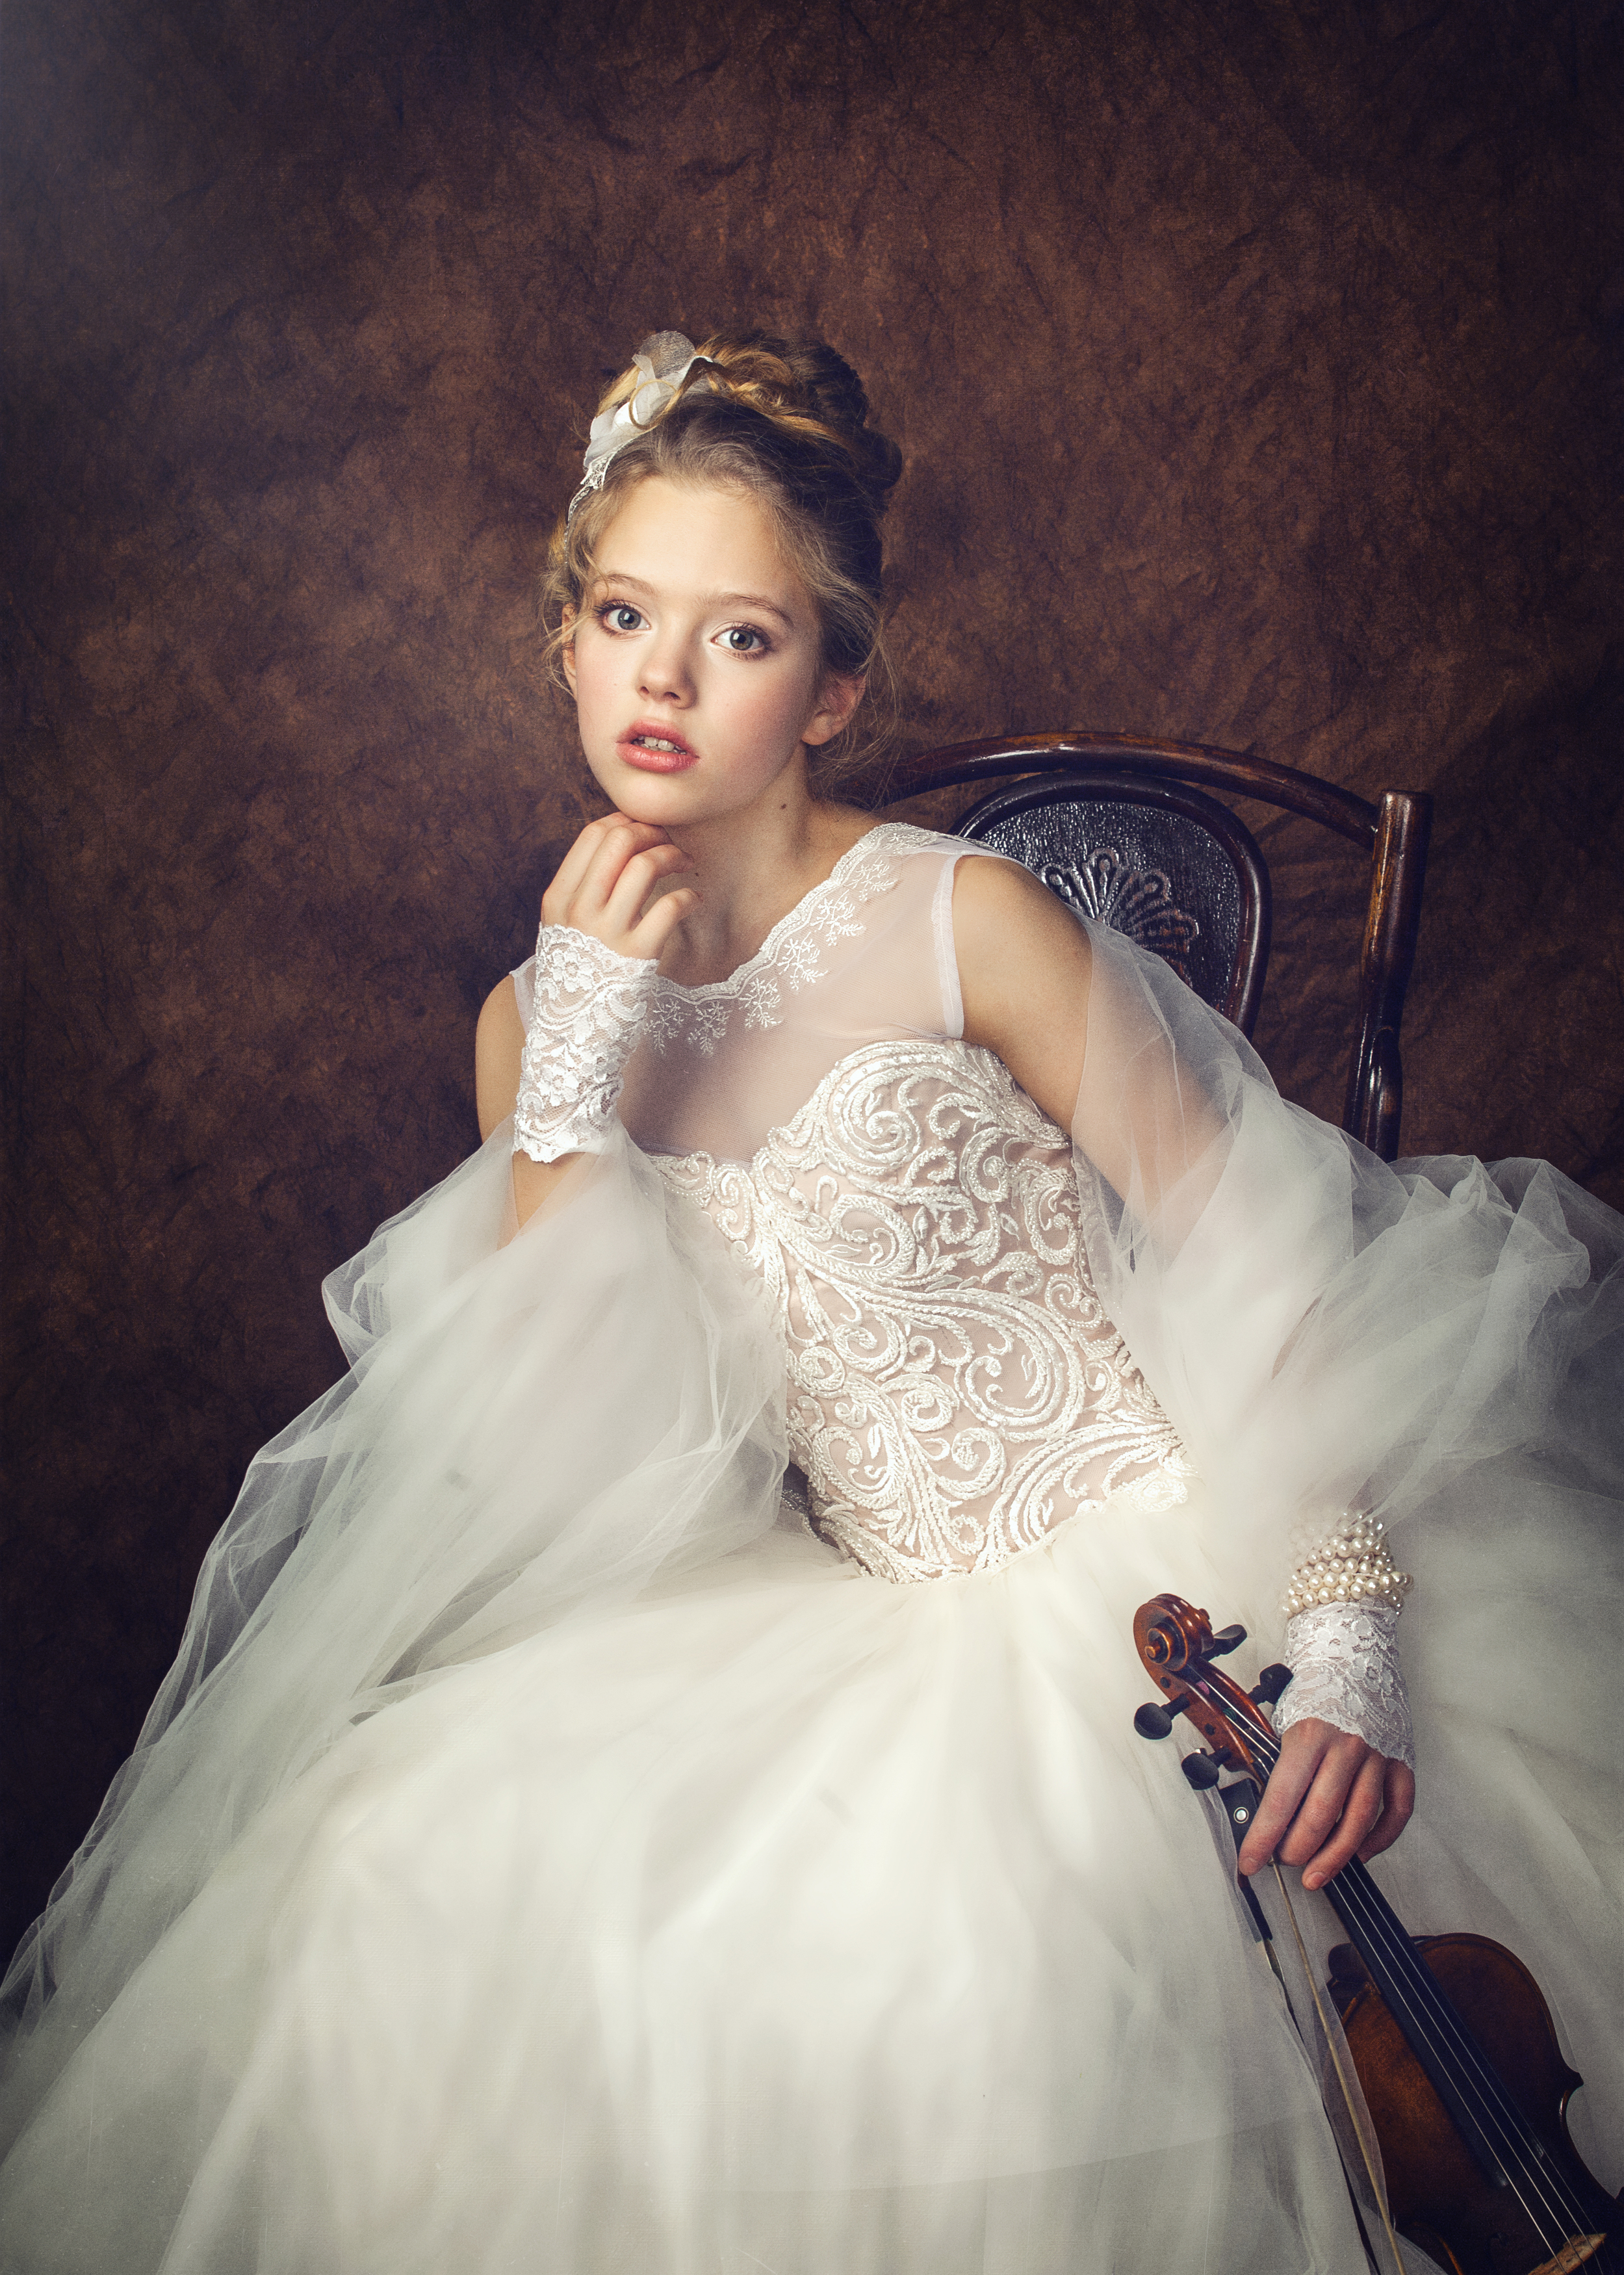 Maksim Antoniuk Women Brunette Looking At Viewer Dress White Clothing Violin Chair 2499x3500